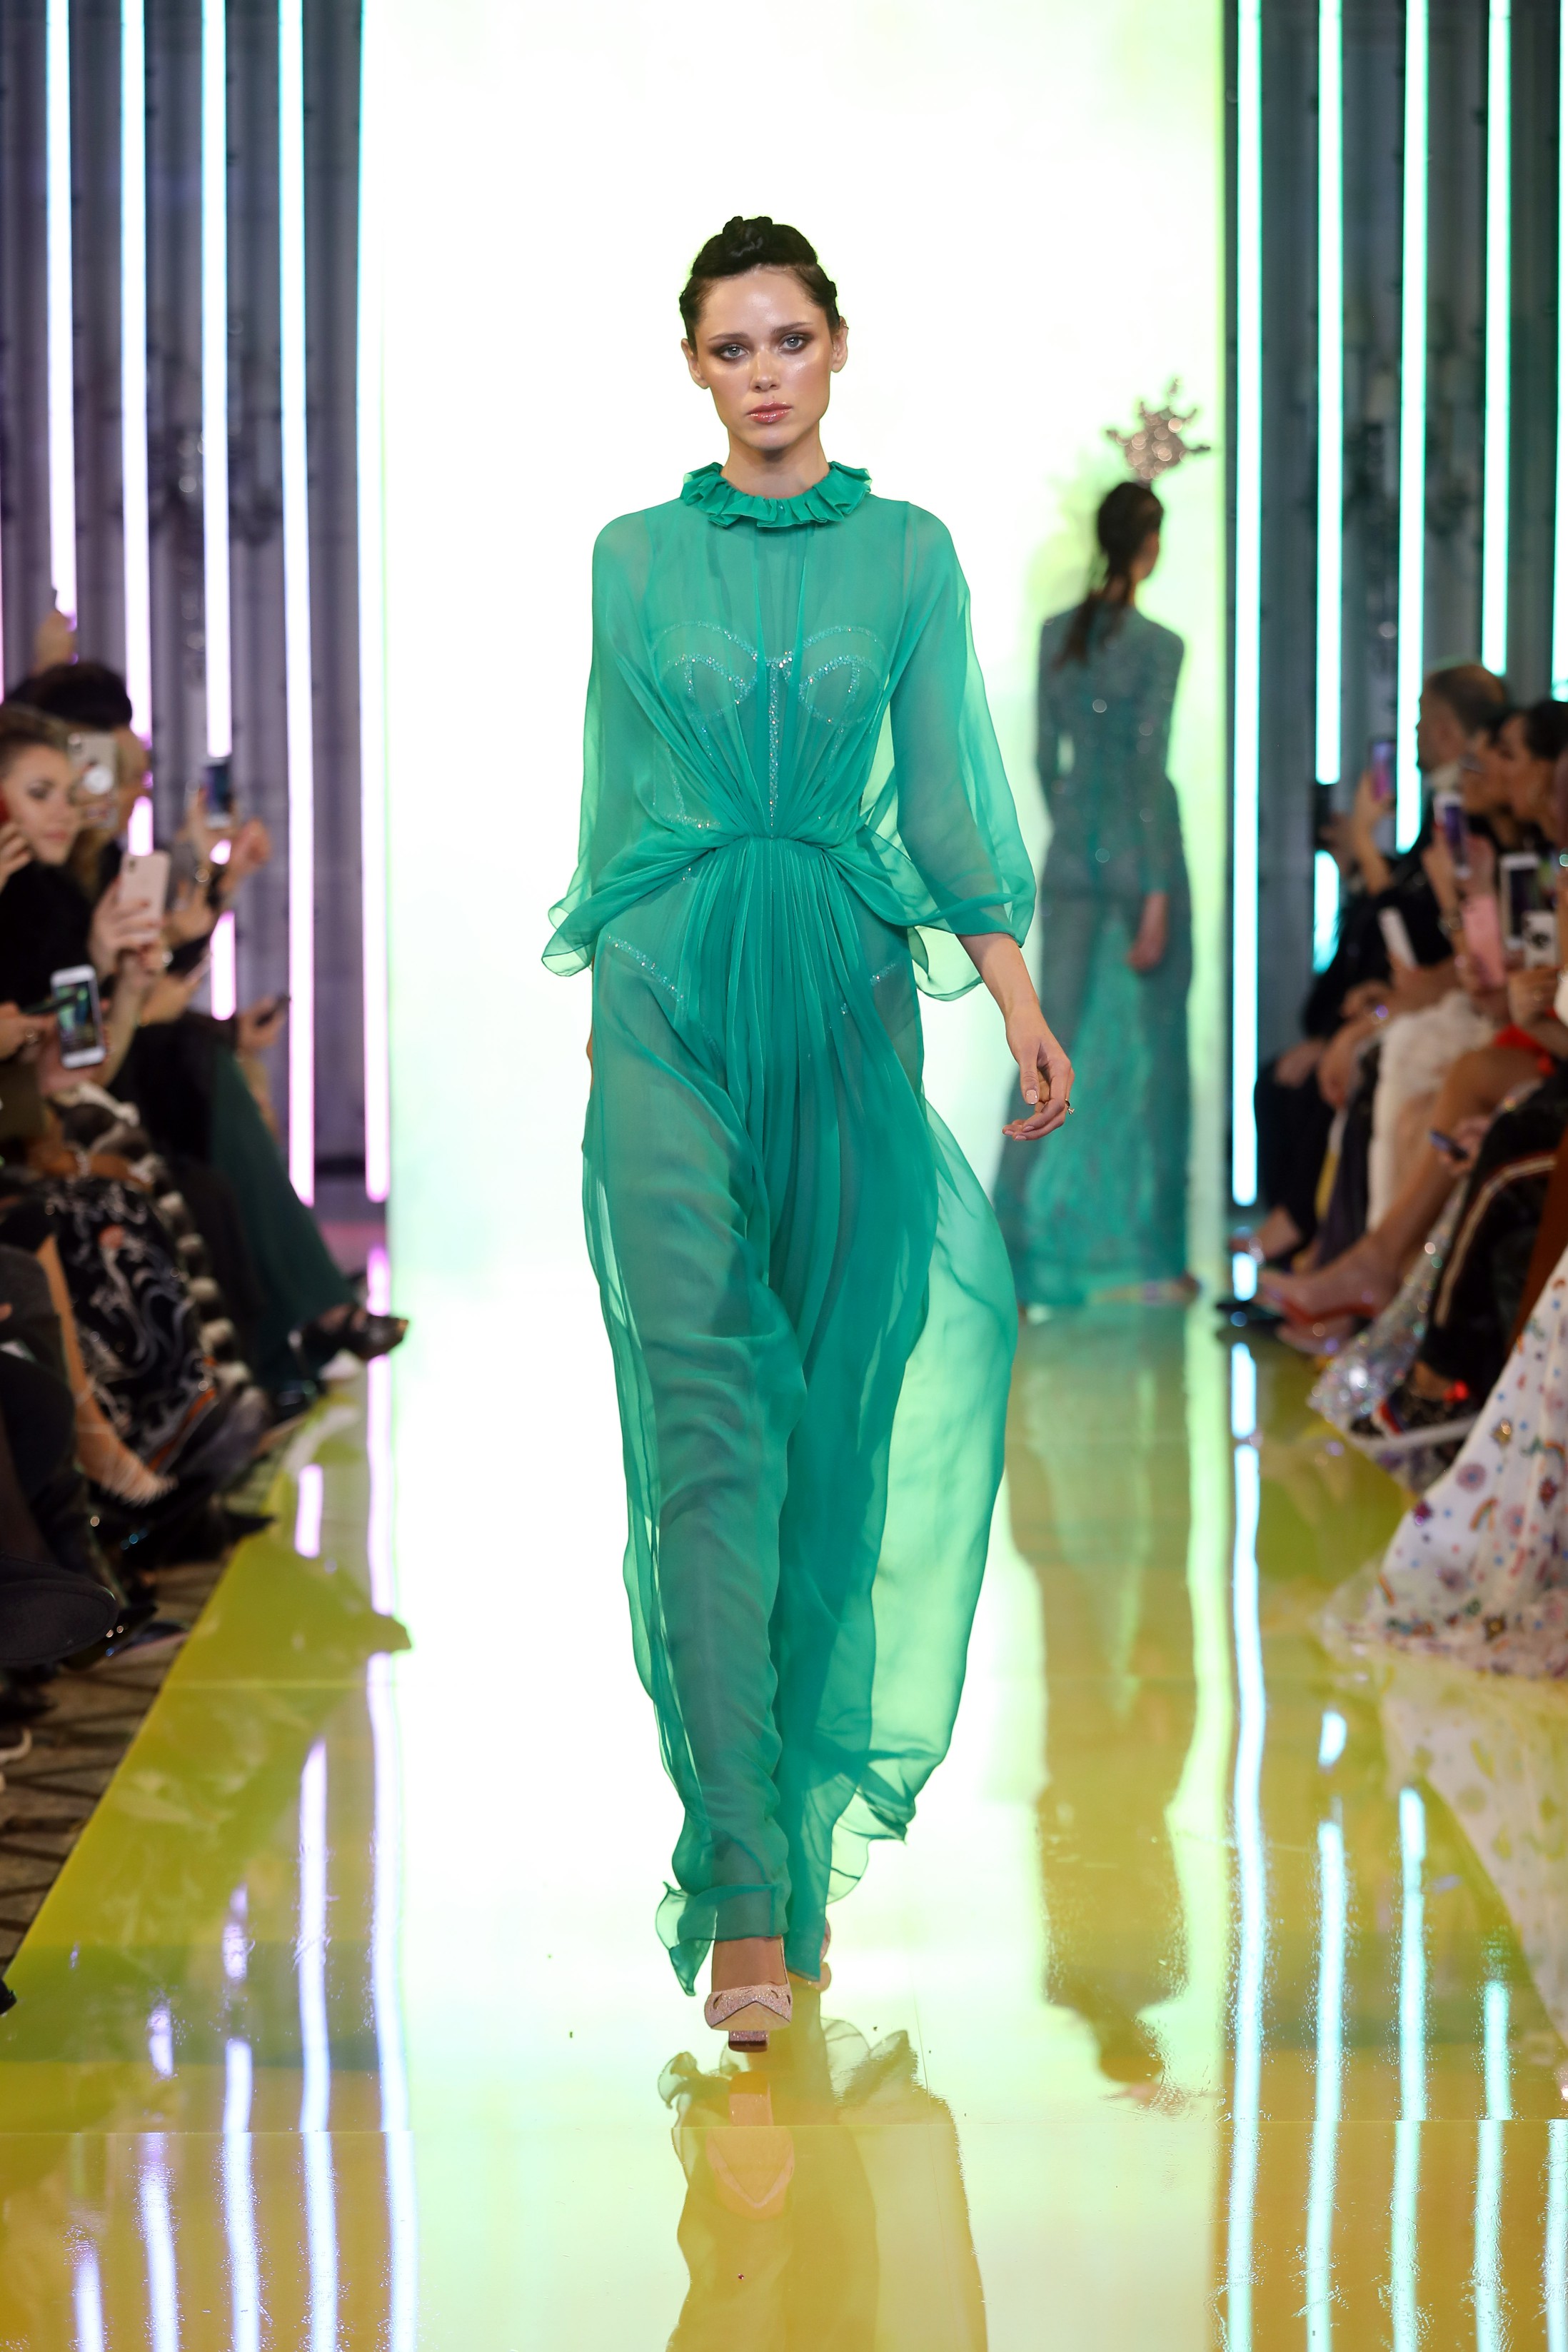 SS19-15- Petrol Green Silk Chiffon Dress Featuring A Bustier Highlighted With Swarovski Stones .jpg